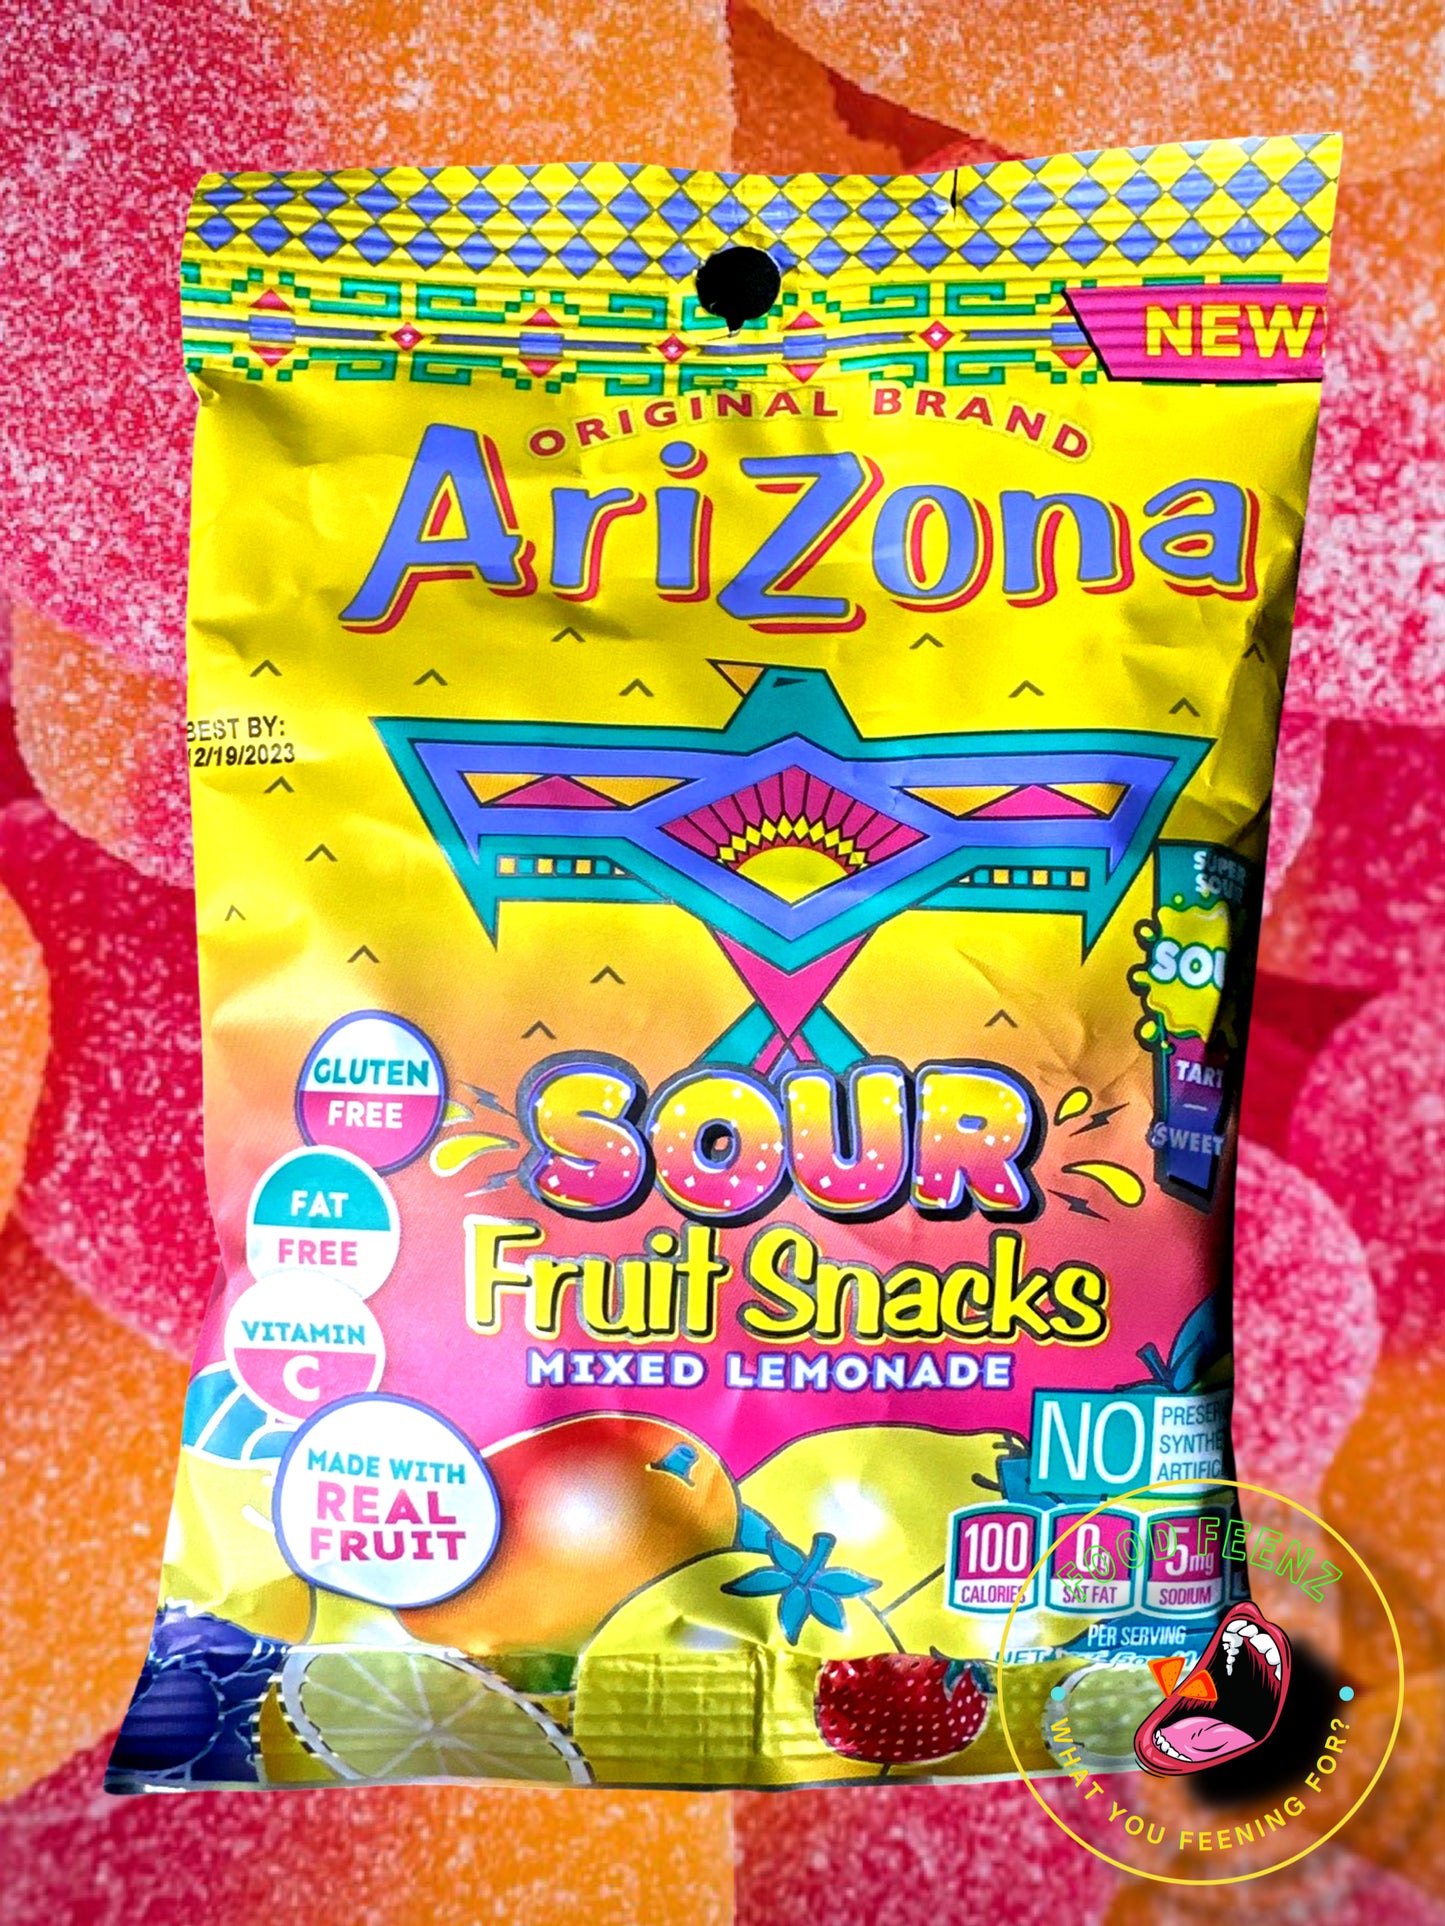 NEW Arizona Sour Fruit Snack Mixed Lemonade Flavor